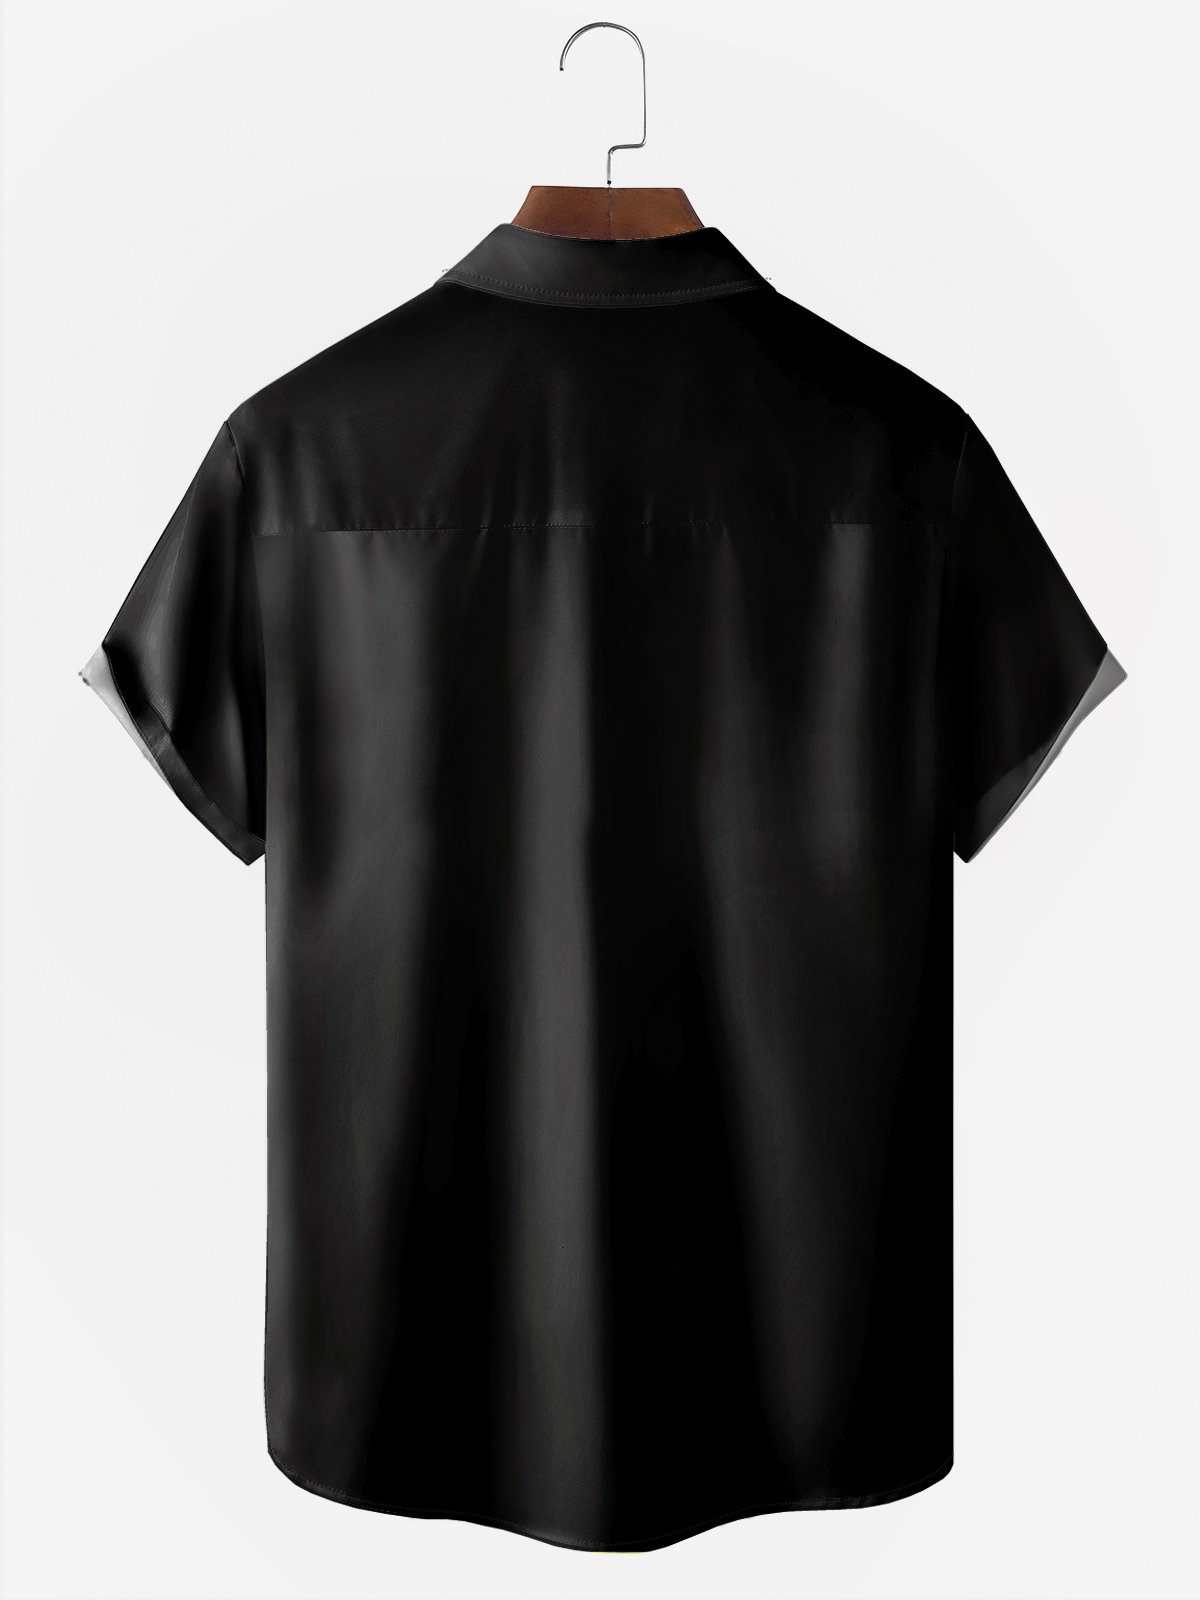 Ombre Pocket Short Sleeve Casual Shirt